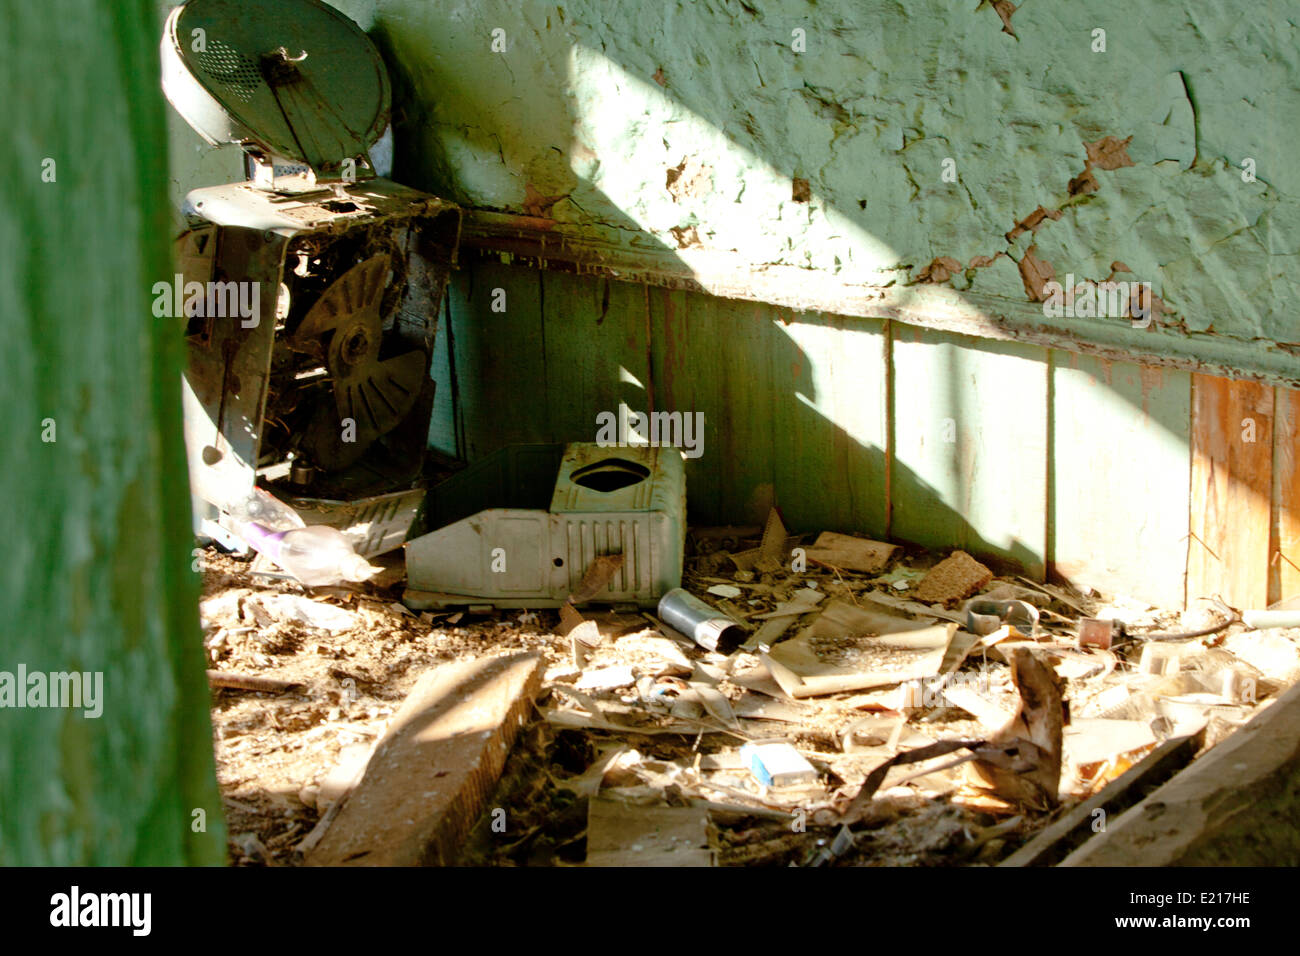 Deserted house urban decay broken junk rubbish Stock Photo